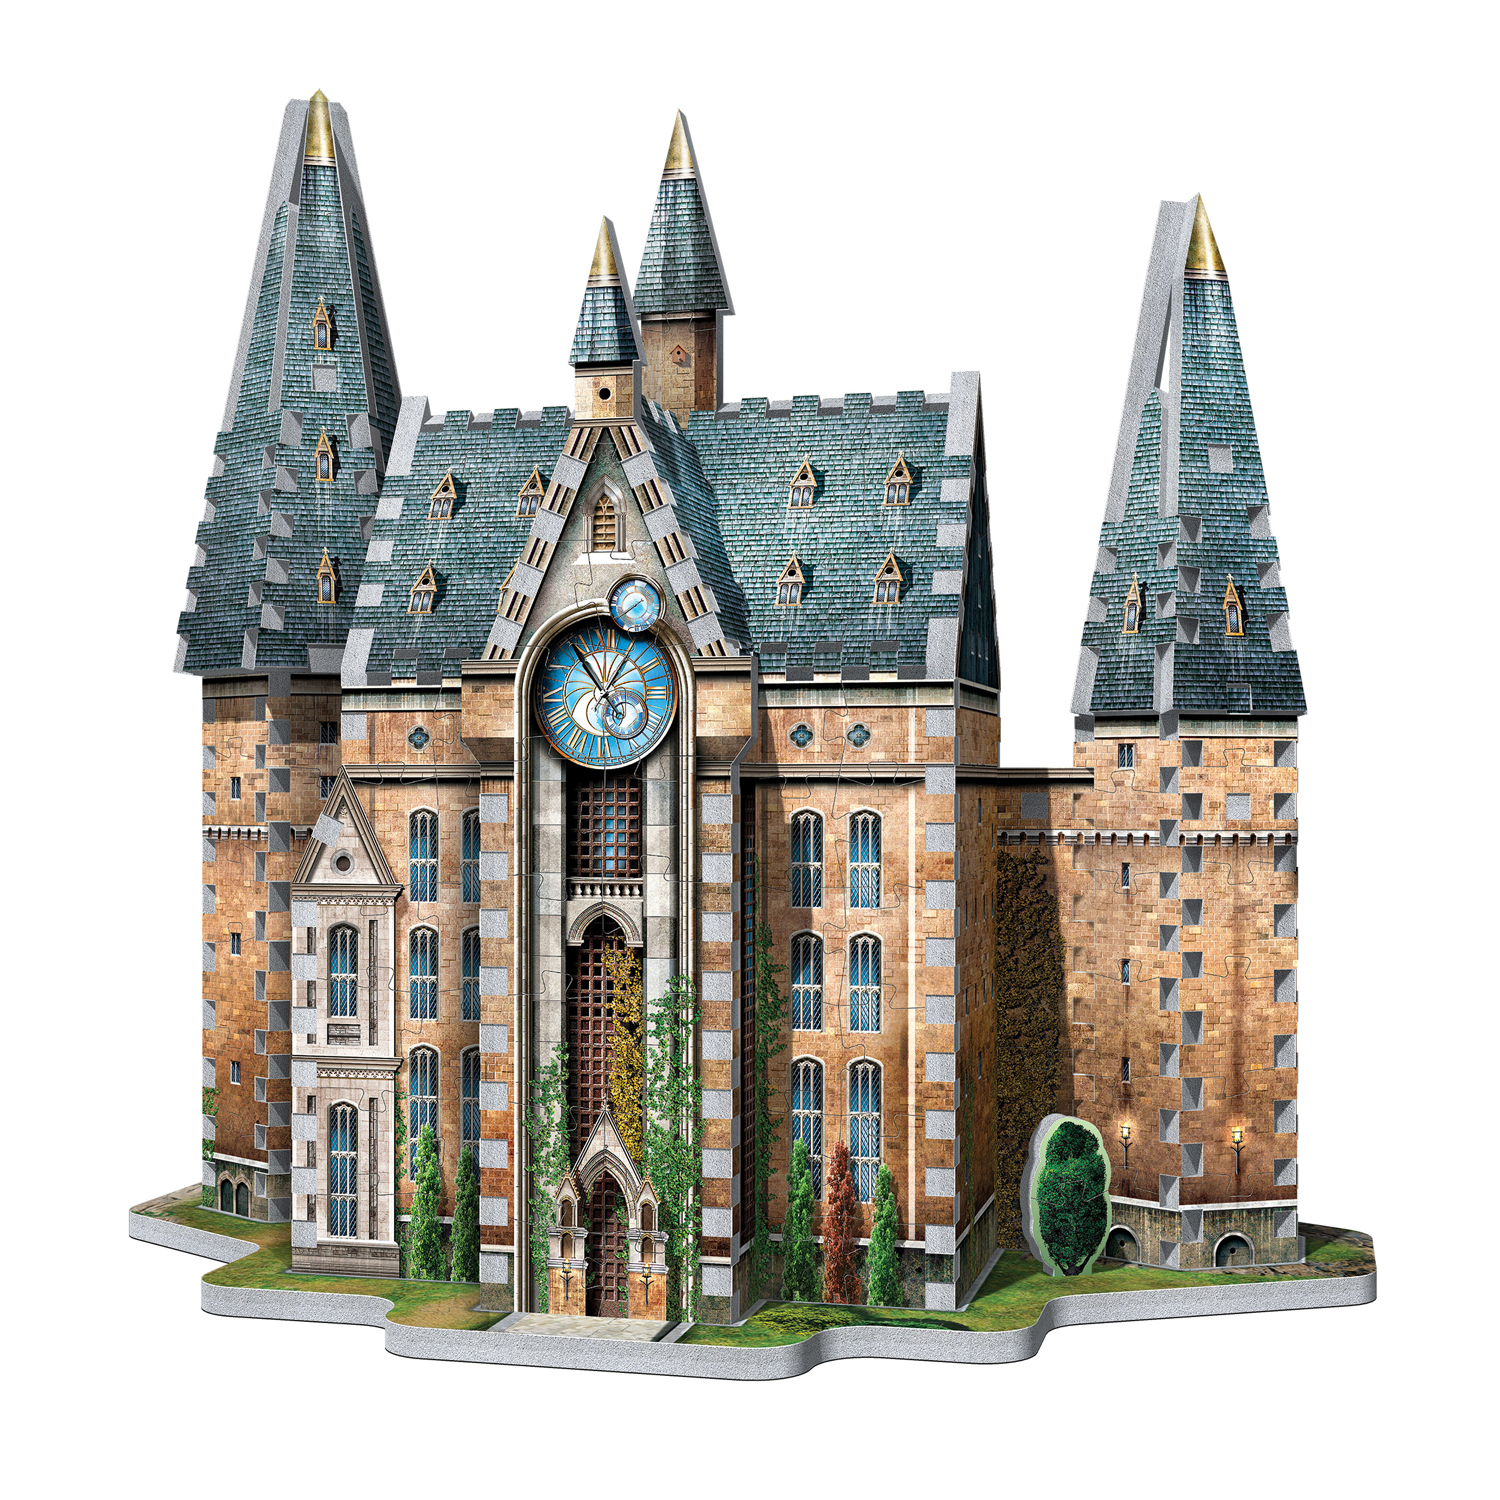 Wrebbit 3D - Harry Potter Hogwarts Great Hall 3D Jigsaw Puzzle